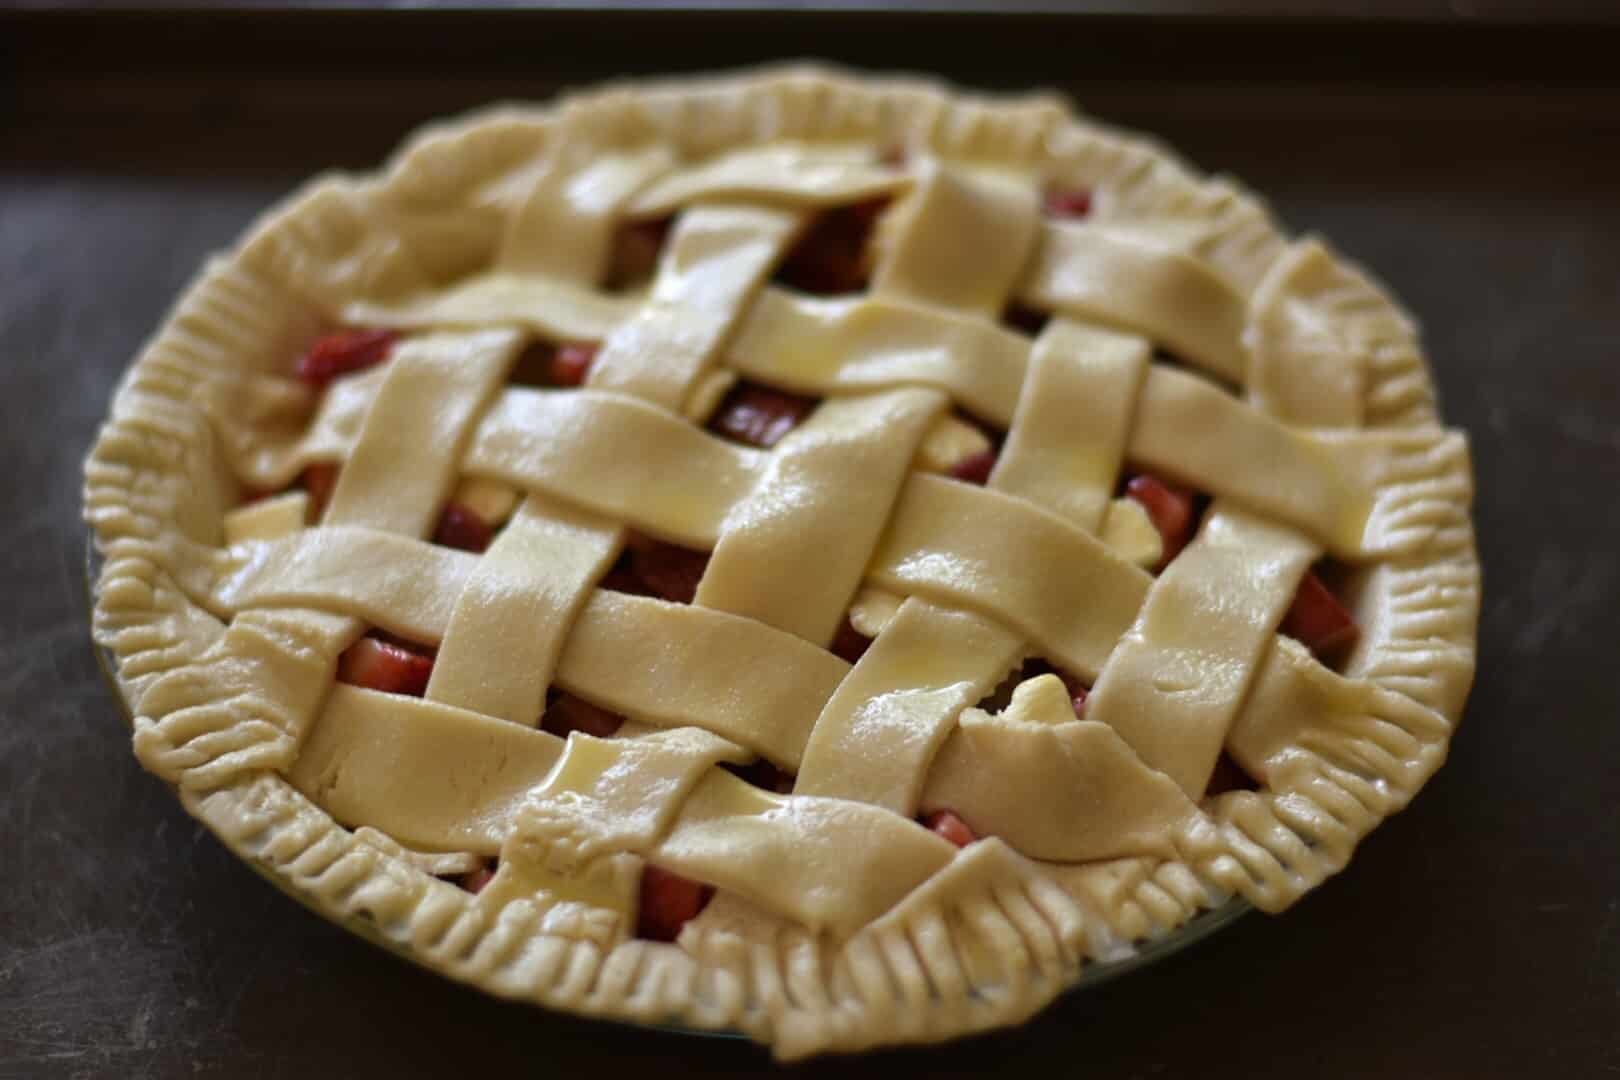 strawberry rhubarb pie before baking